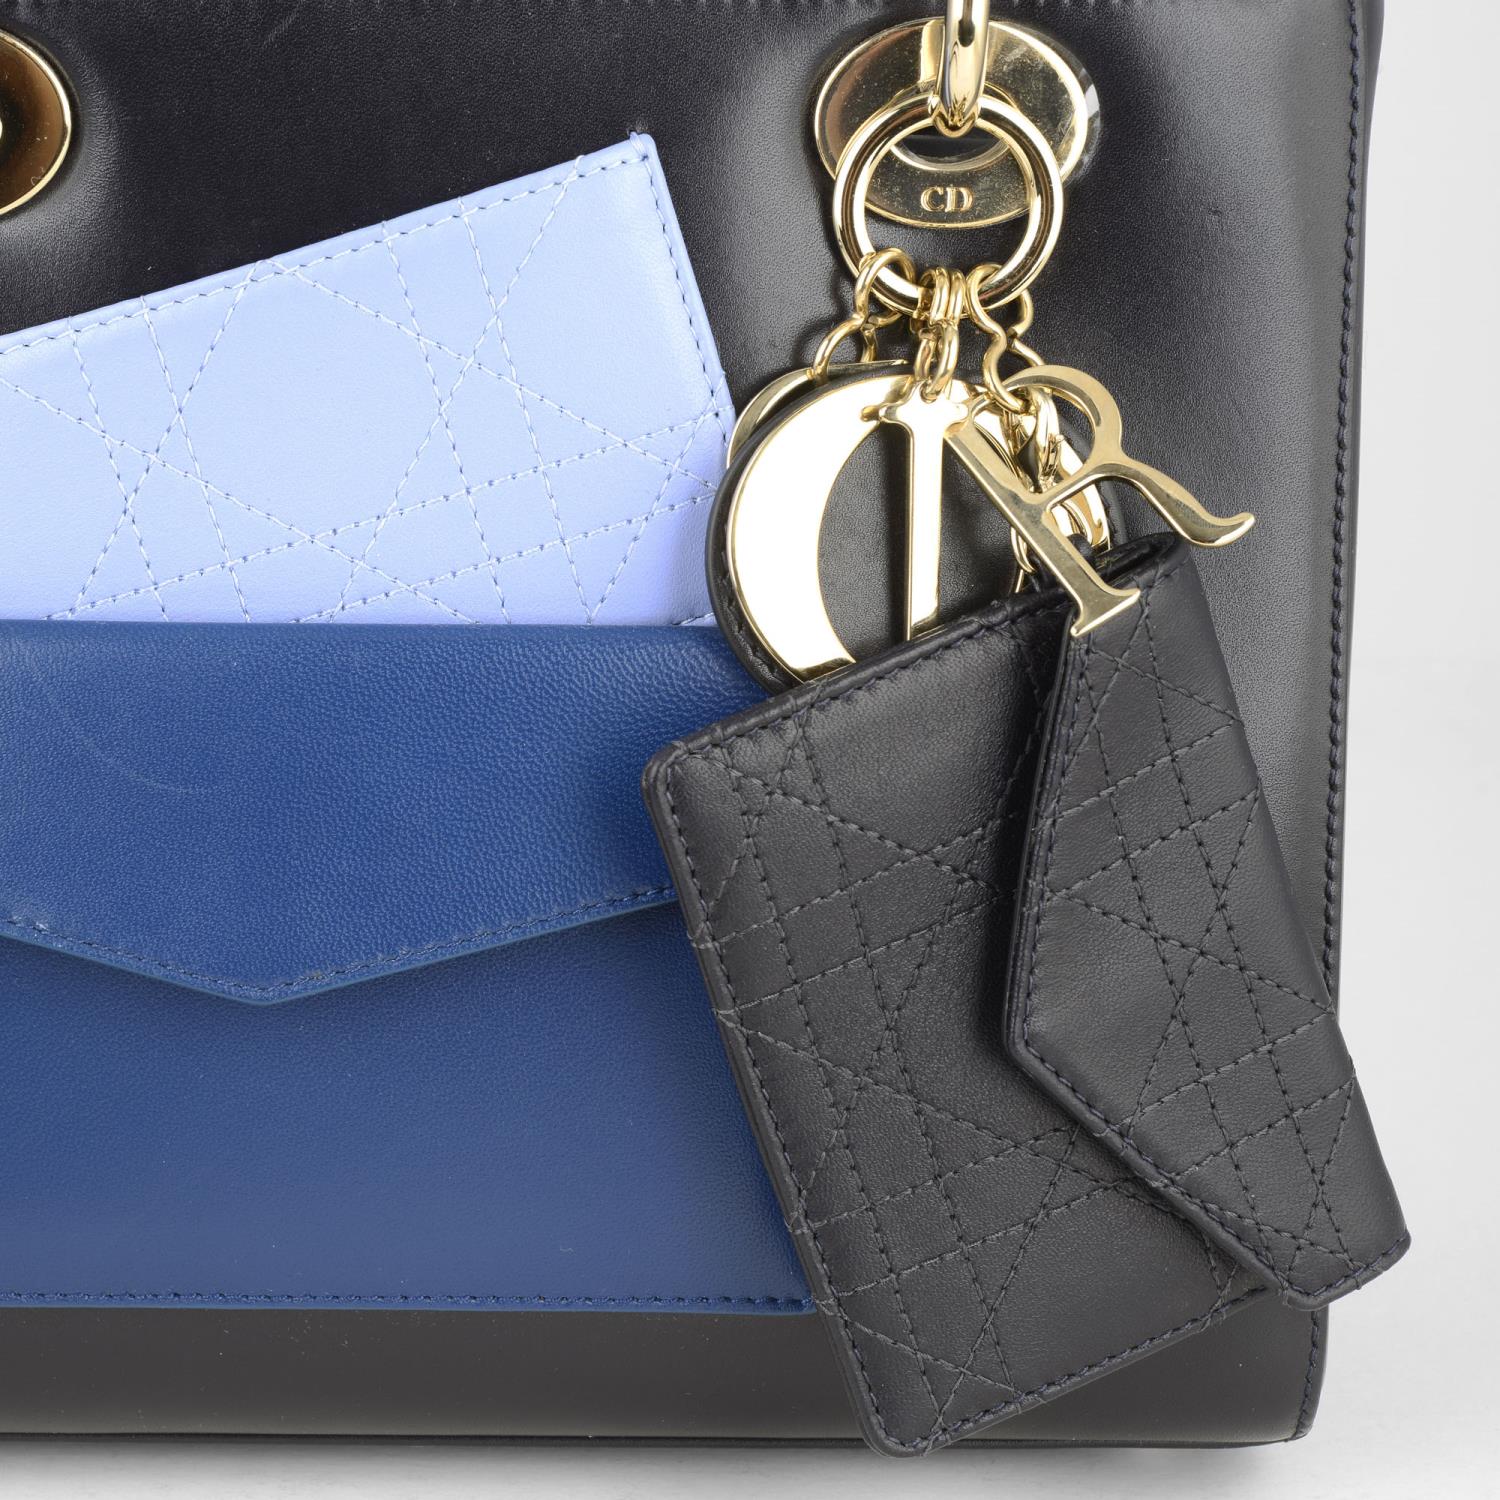 CHRISTIAN DIOR - a limited edition Lady Dior Pockets MM handbag. - Image 5 of 9